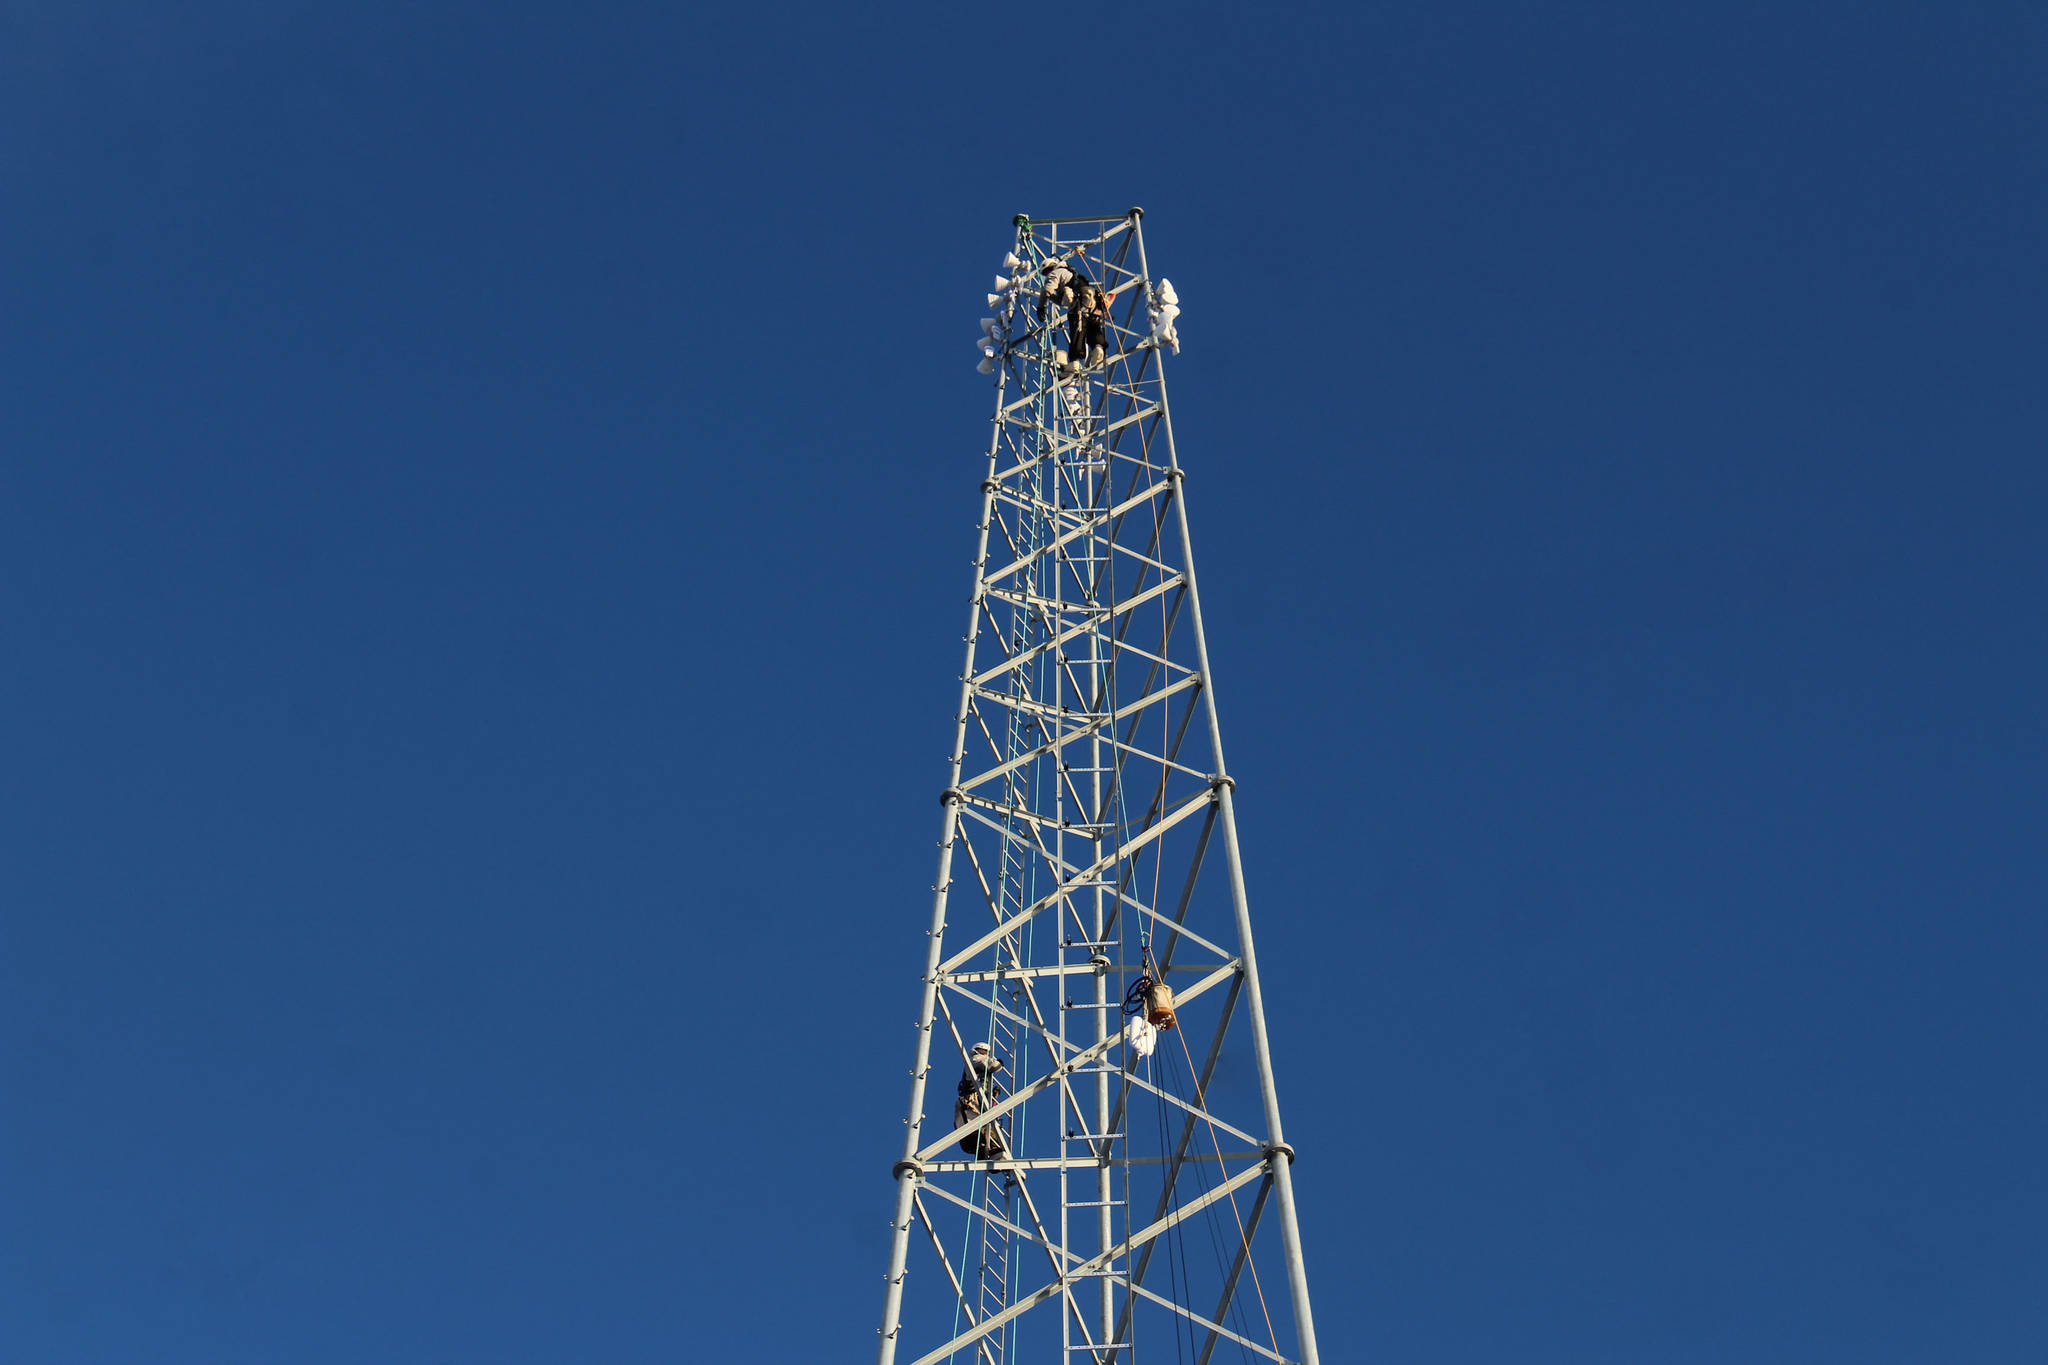 Adam Kiffmeyer and Billy Adamson scale a communications tower on Thursday, Jan. 7 in Nikiski, Alaska. (Ashlyn O’Hara/Peninsula Clarion)